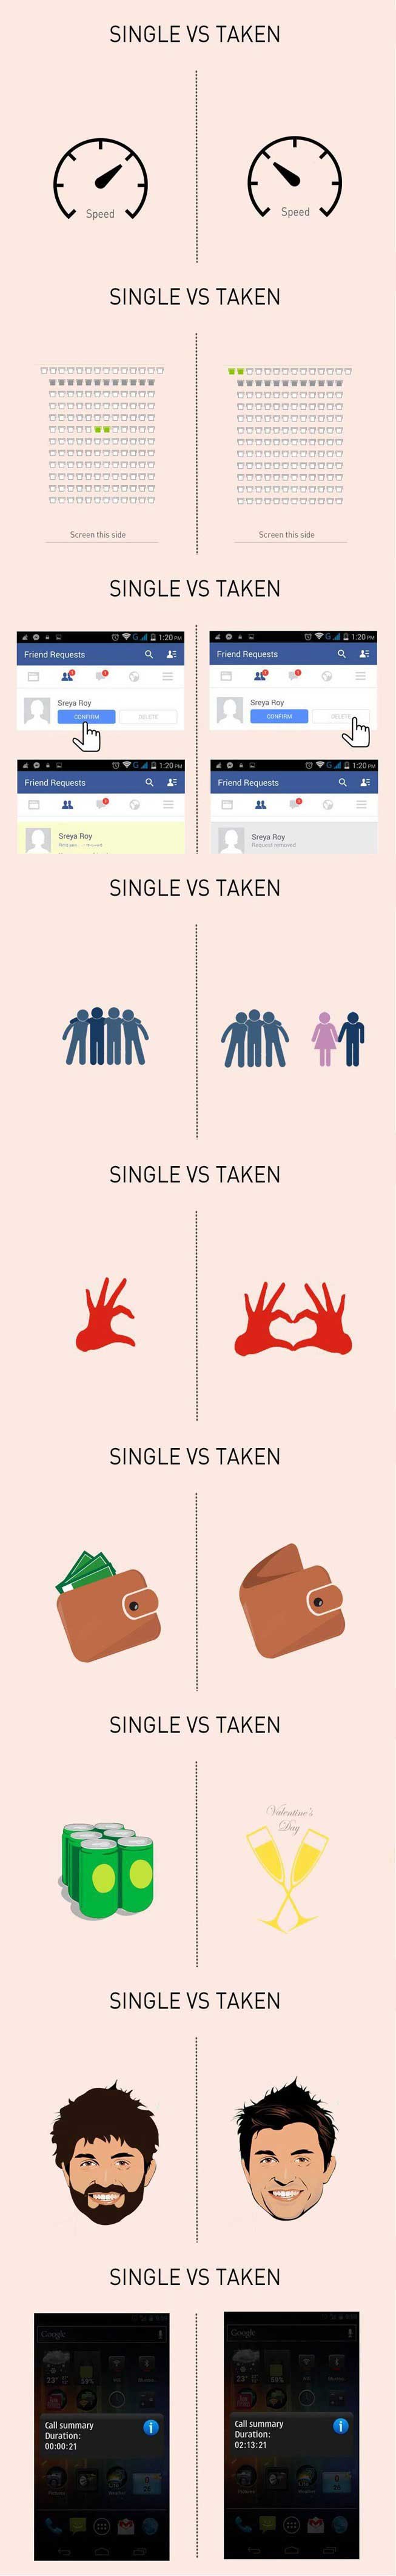 single versus taken, relationship, forever alone